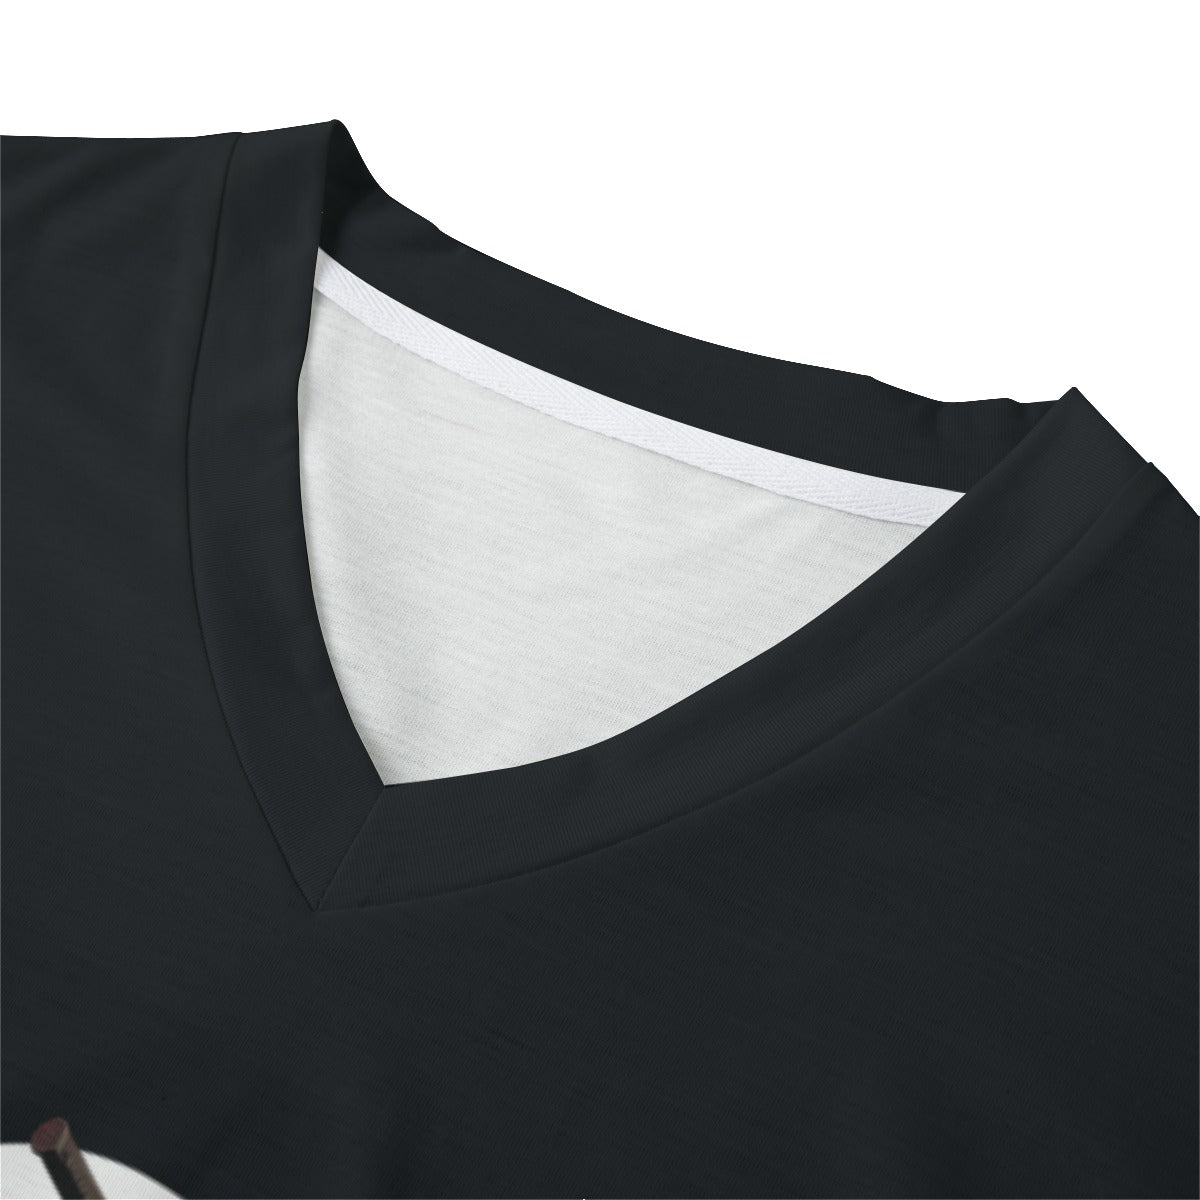 Eco-friendly All-over Print Men's V-neck T-Shirt